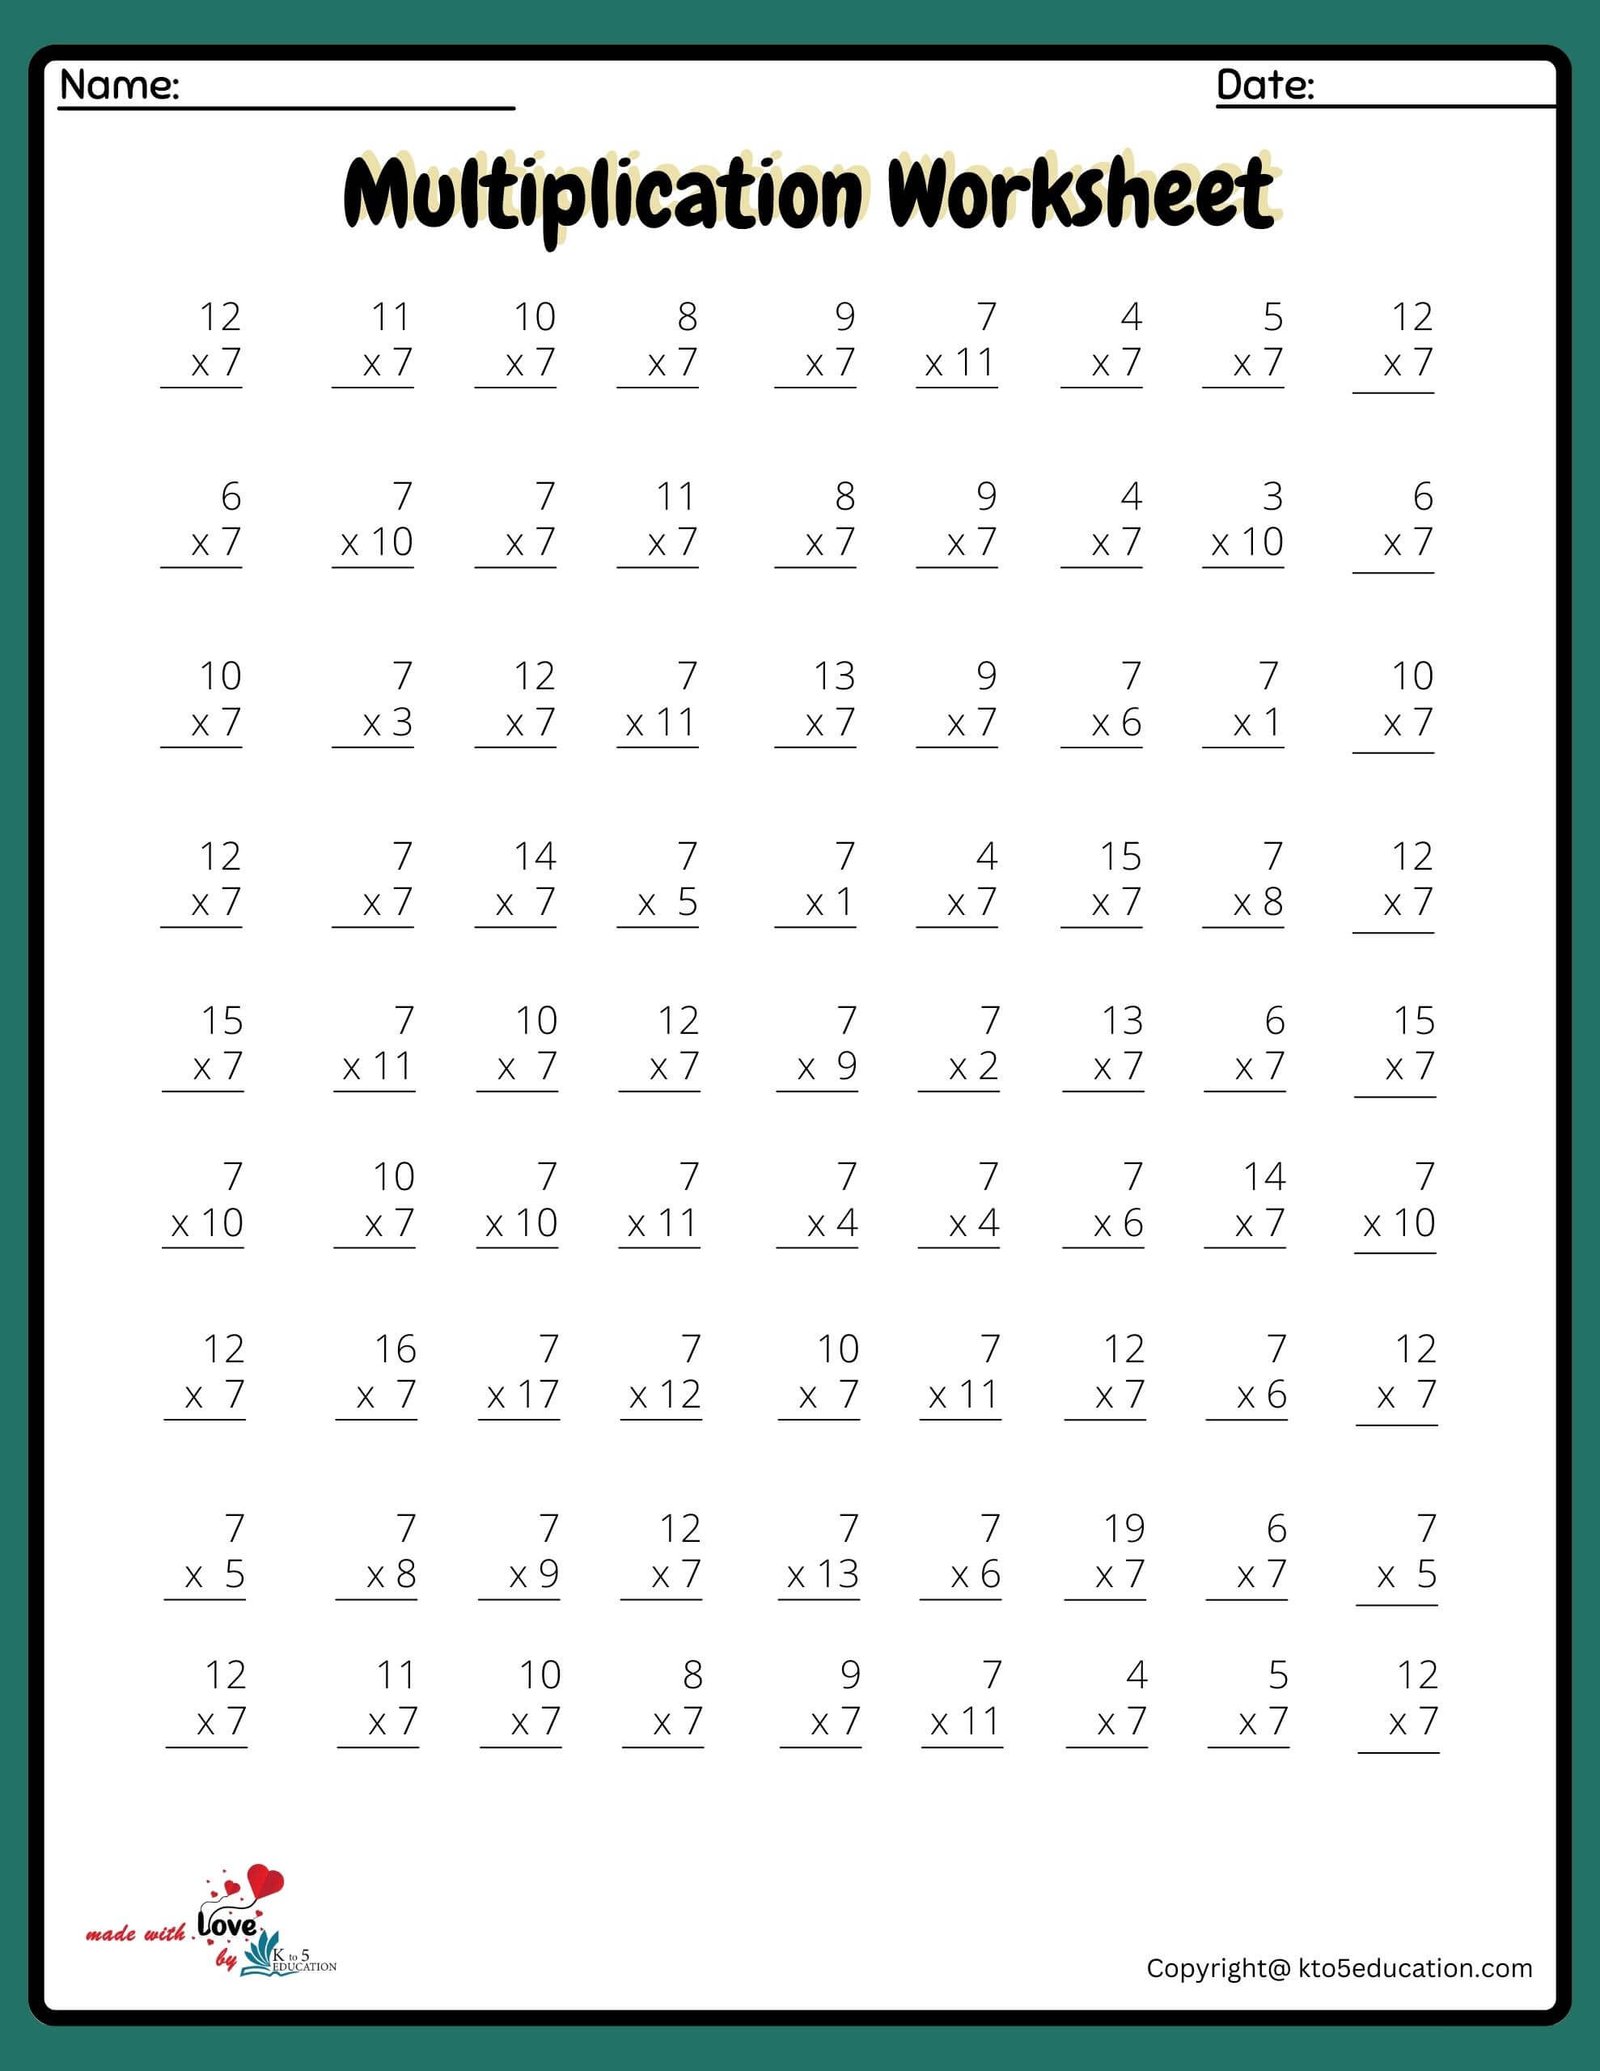 9x9 Multiplication Worksheet